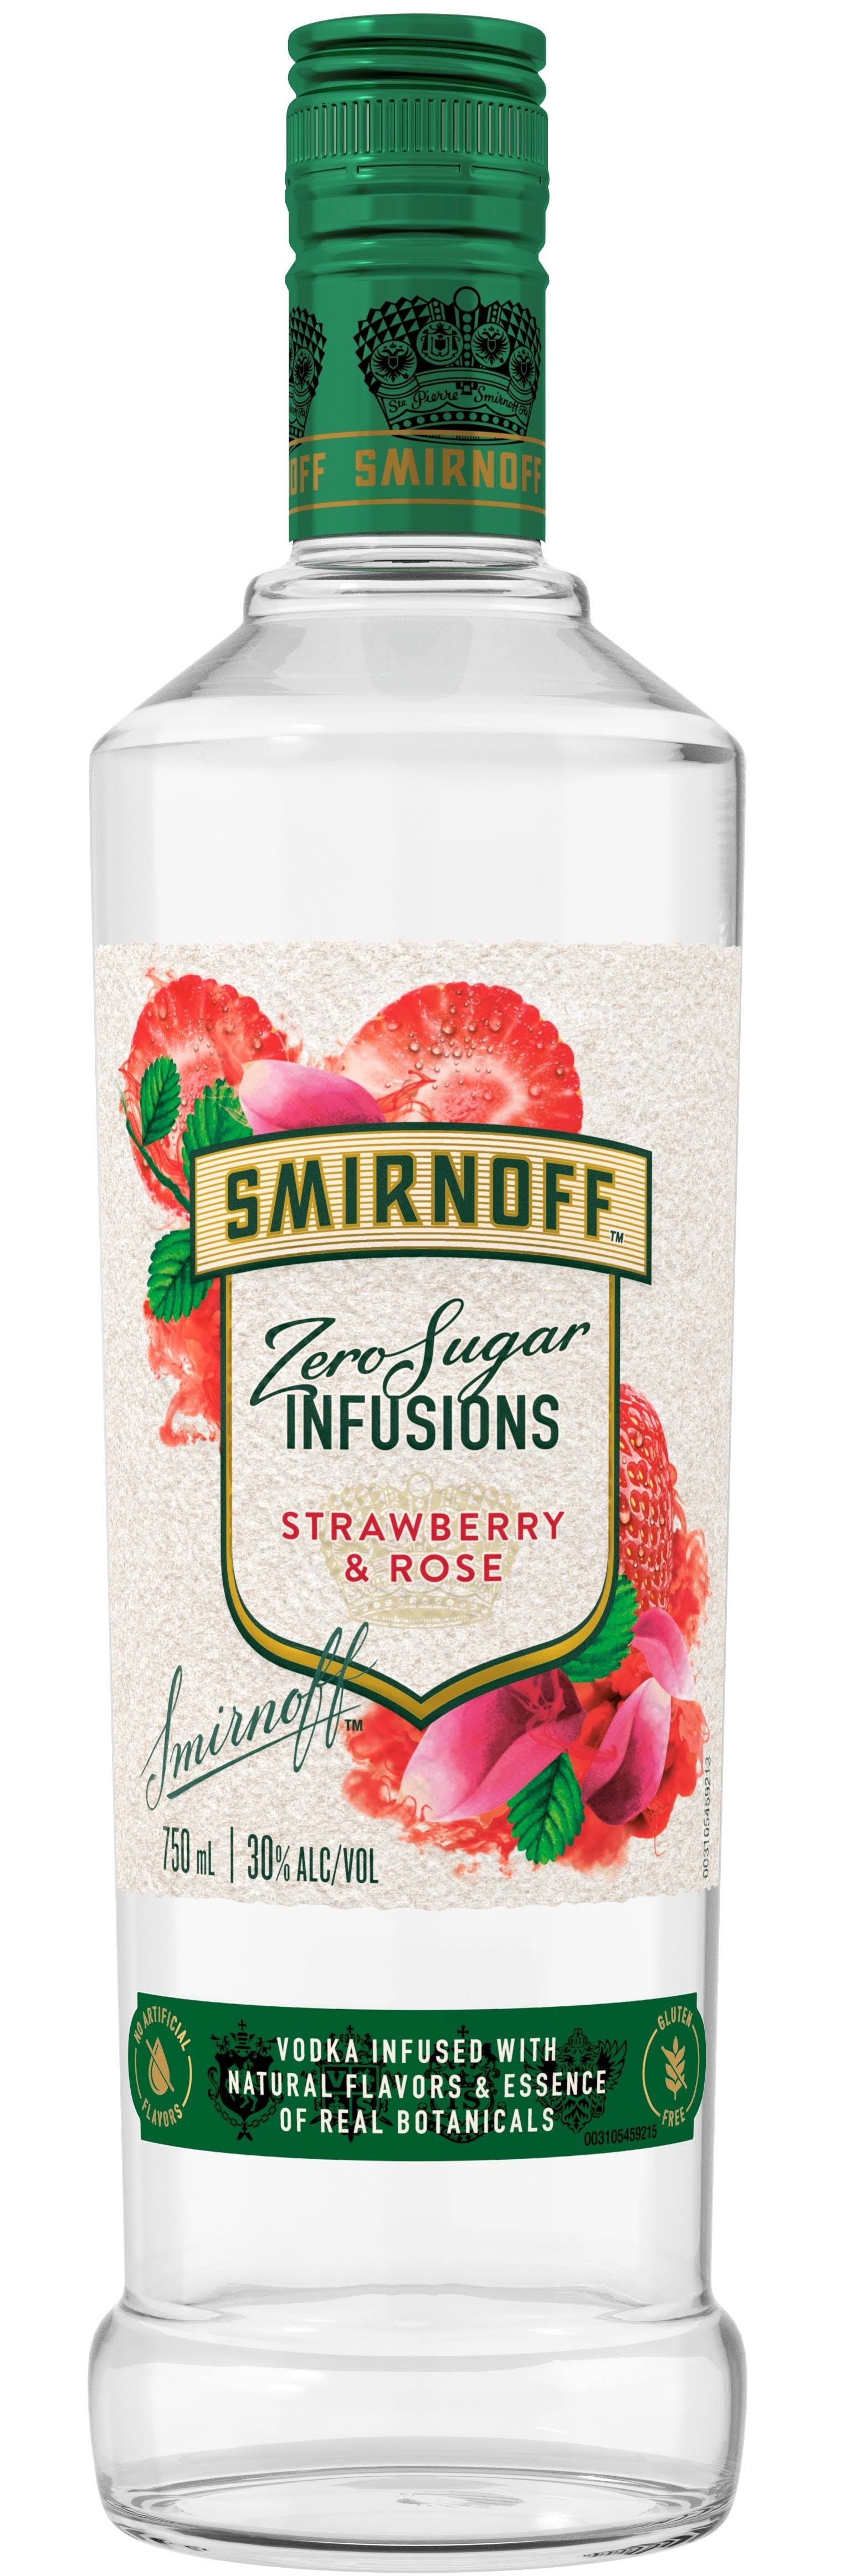 Smirnoff Zero Sugar Infusions Vodka, Strawberry & Rose - 750 ml